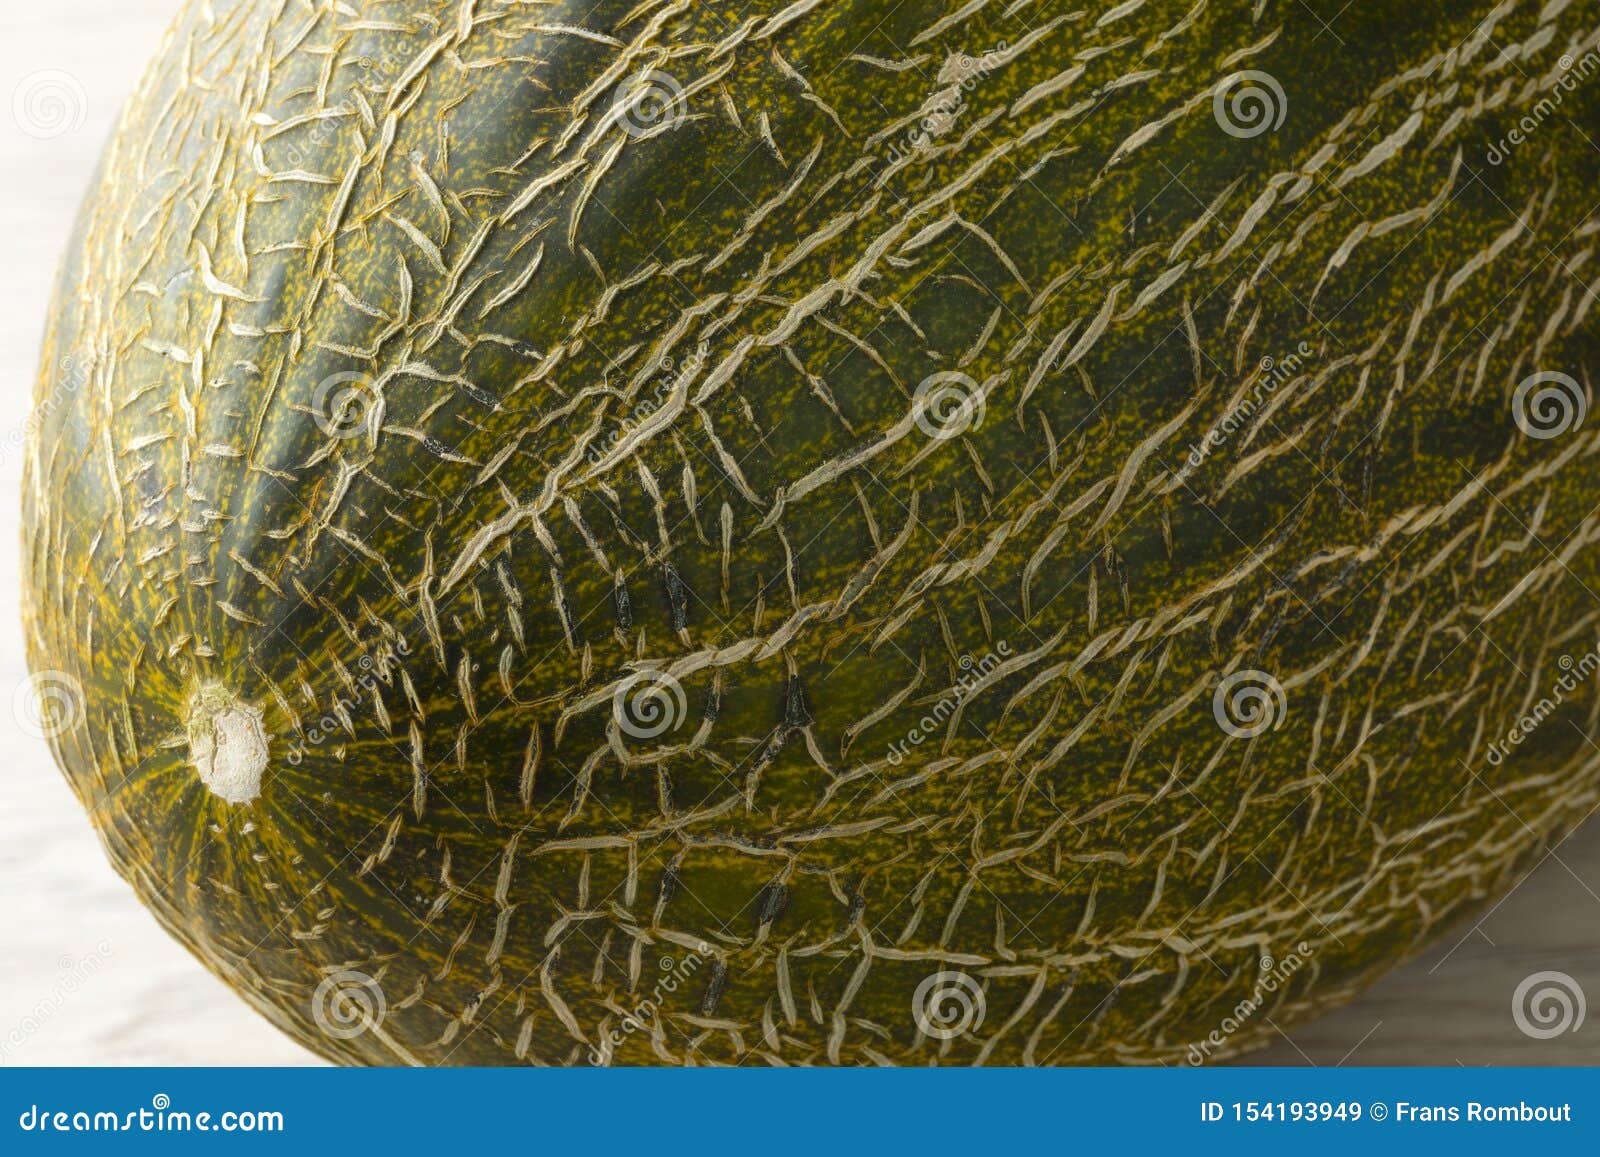 piel de sapo melon close up